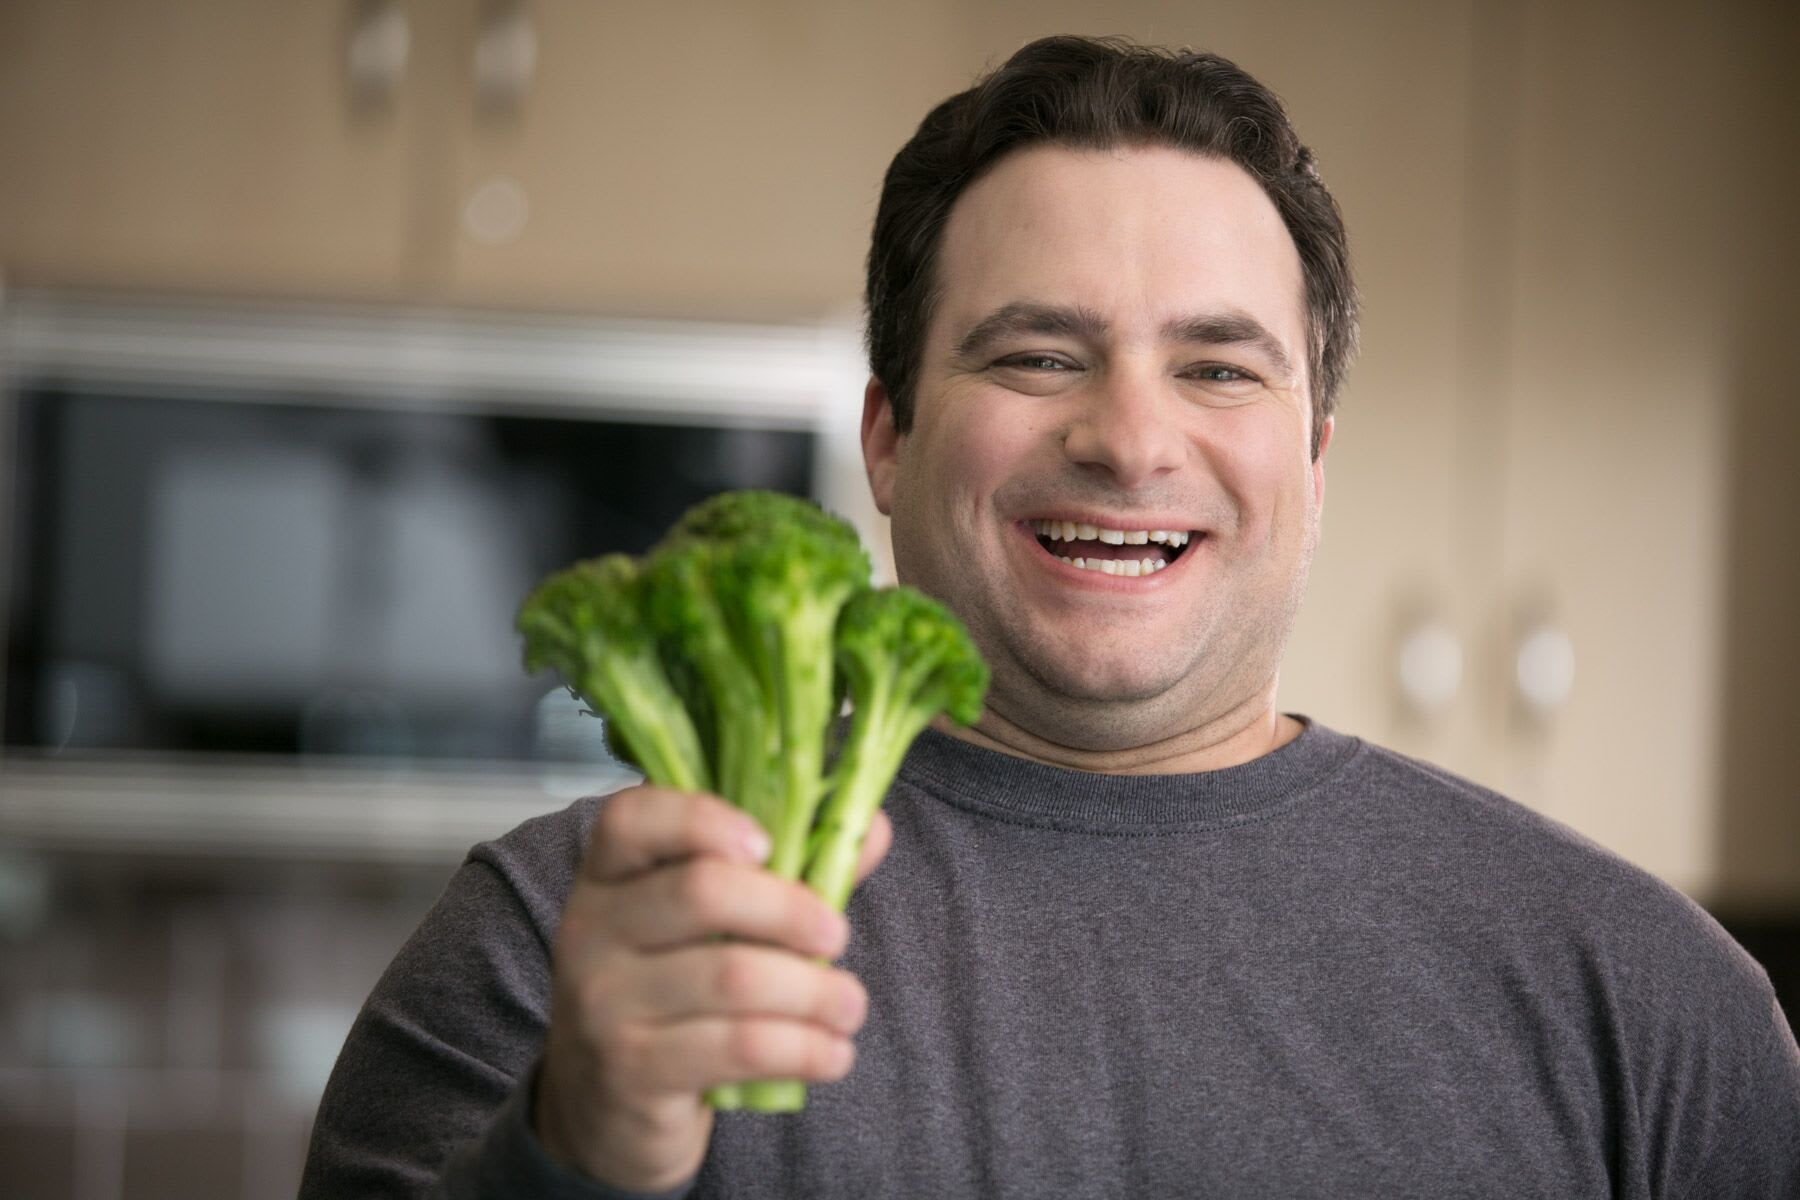 Cardiac rehabilitation patient Joe Servick holding broccoli